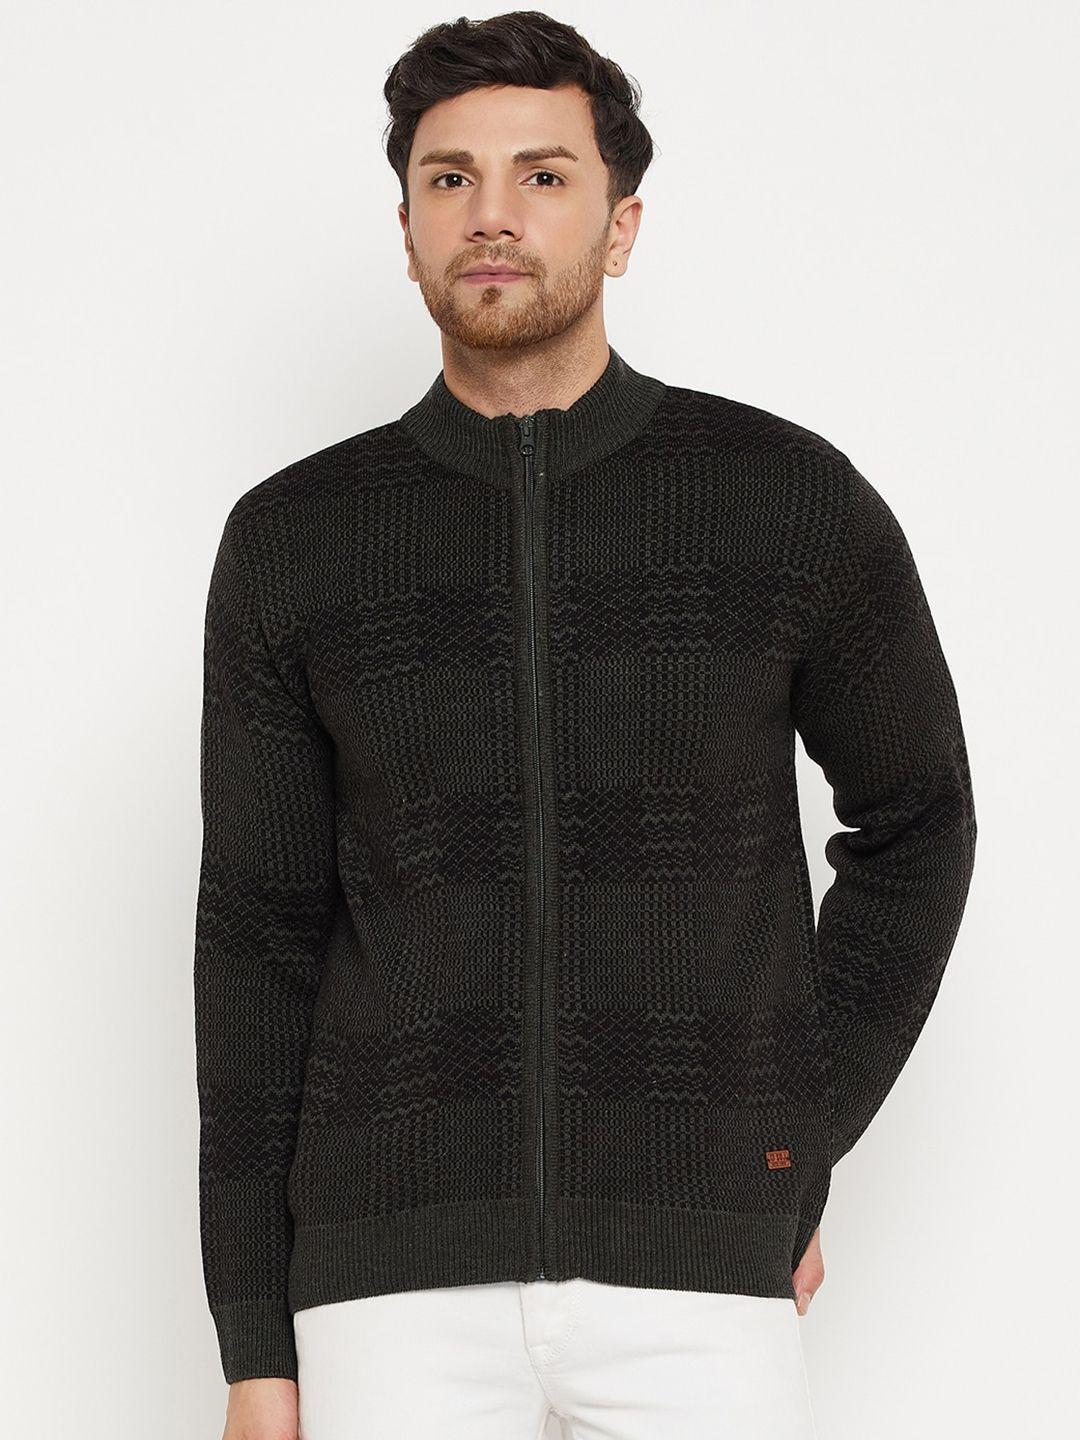 duke-geometric-self-design-mock-collar-front-open-cardigan-sweaters